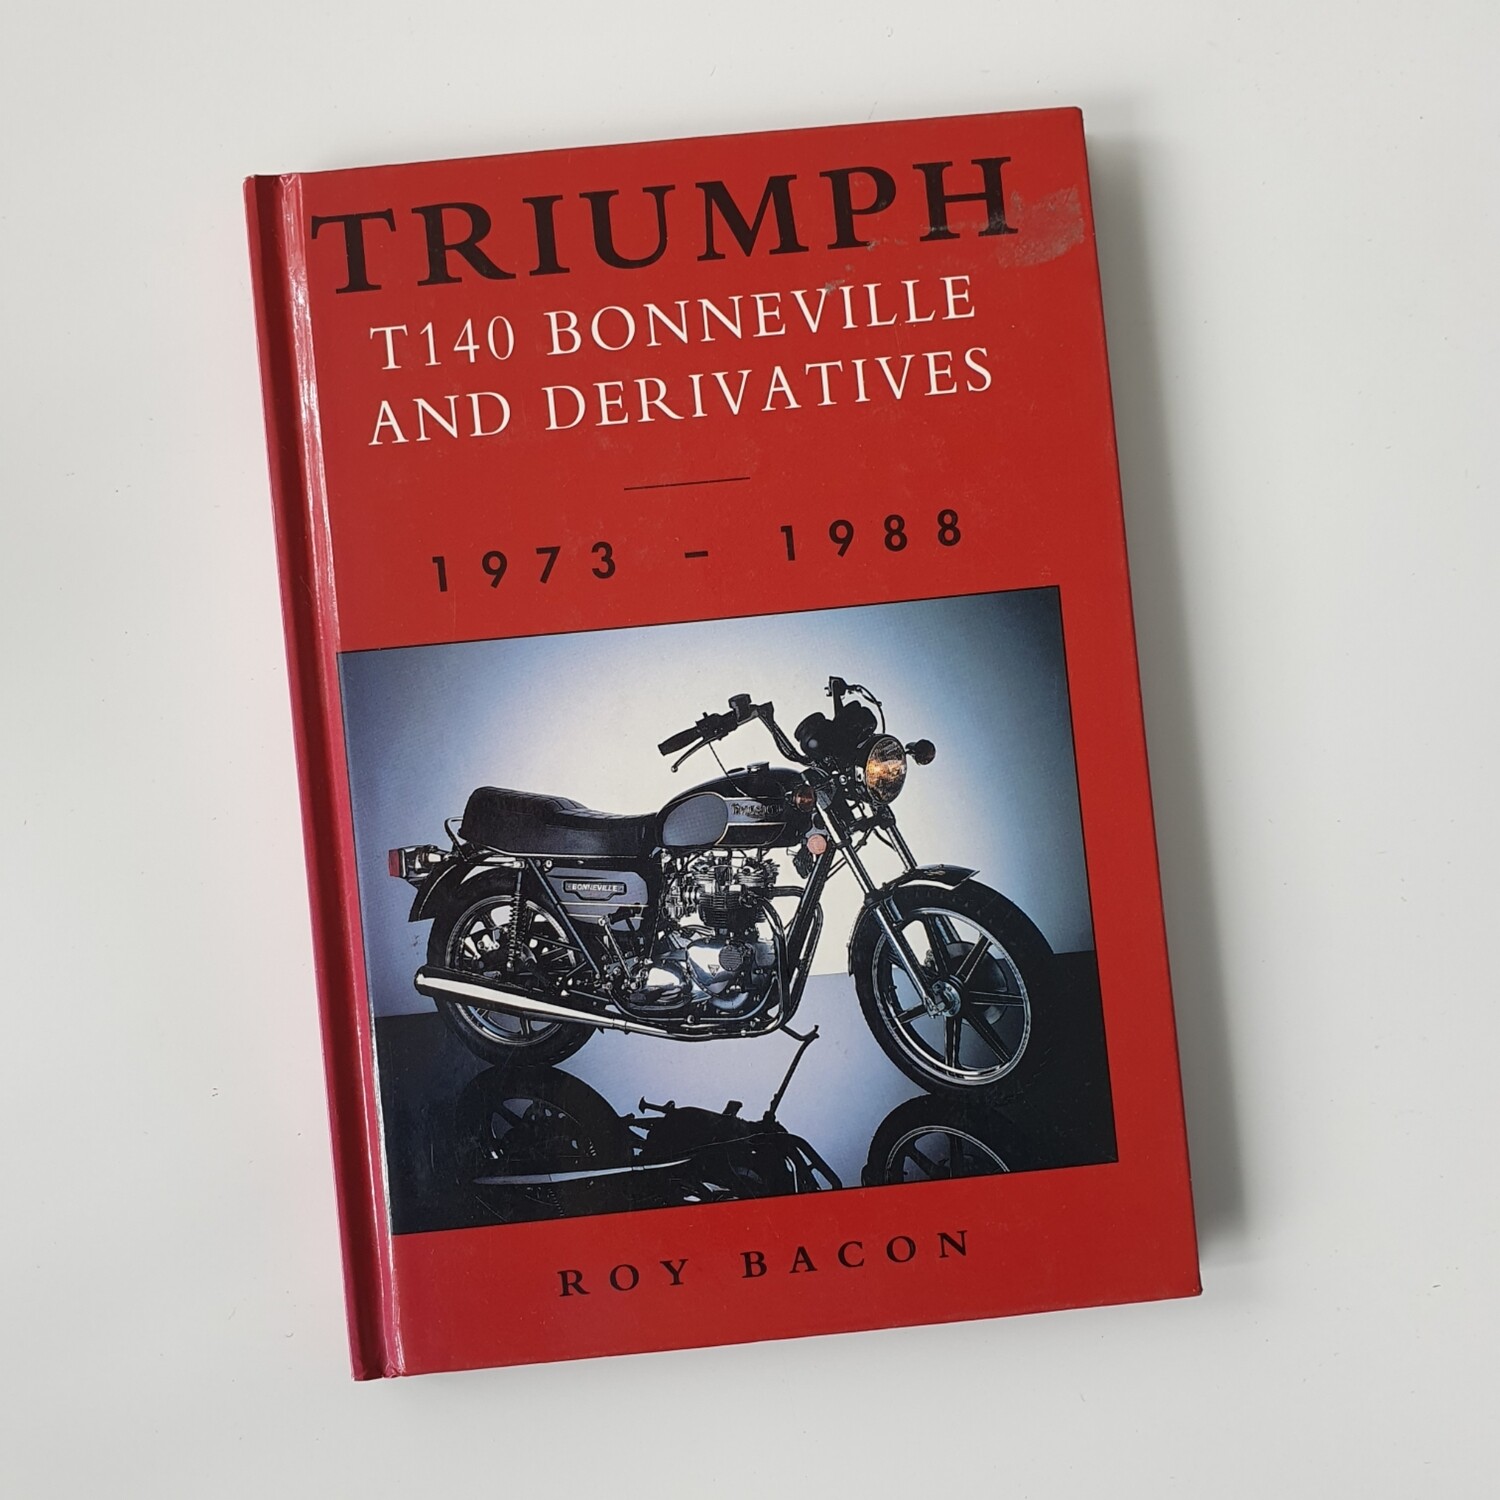 Triumph Motorcycle 1973 - 1988